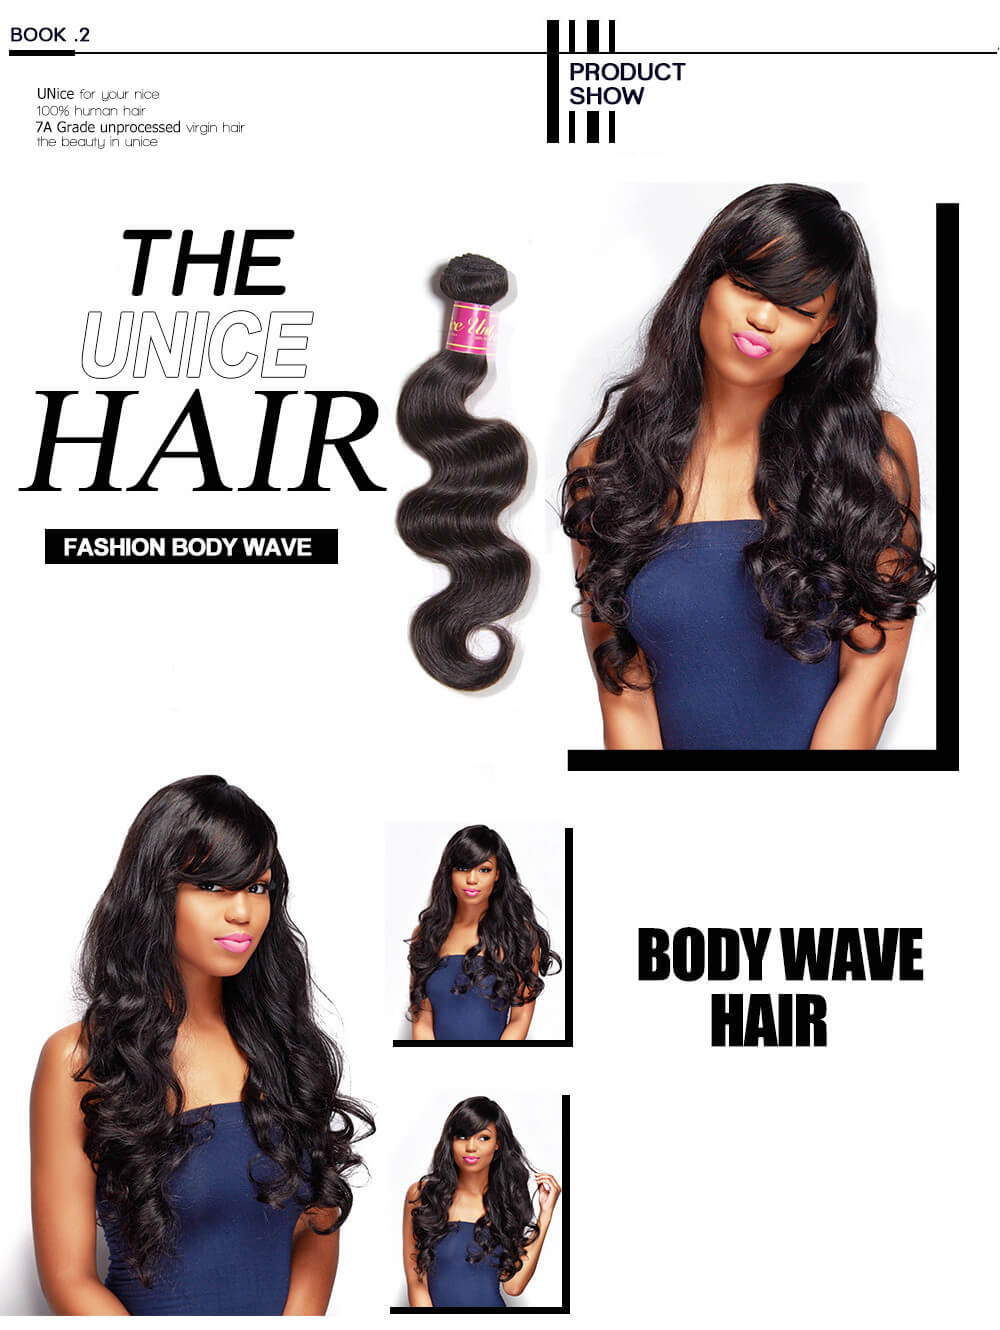 Body wave hair